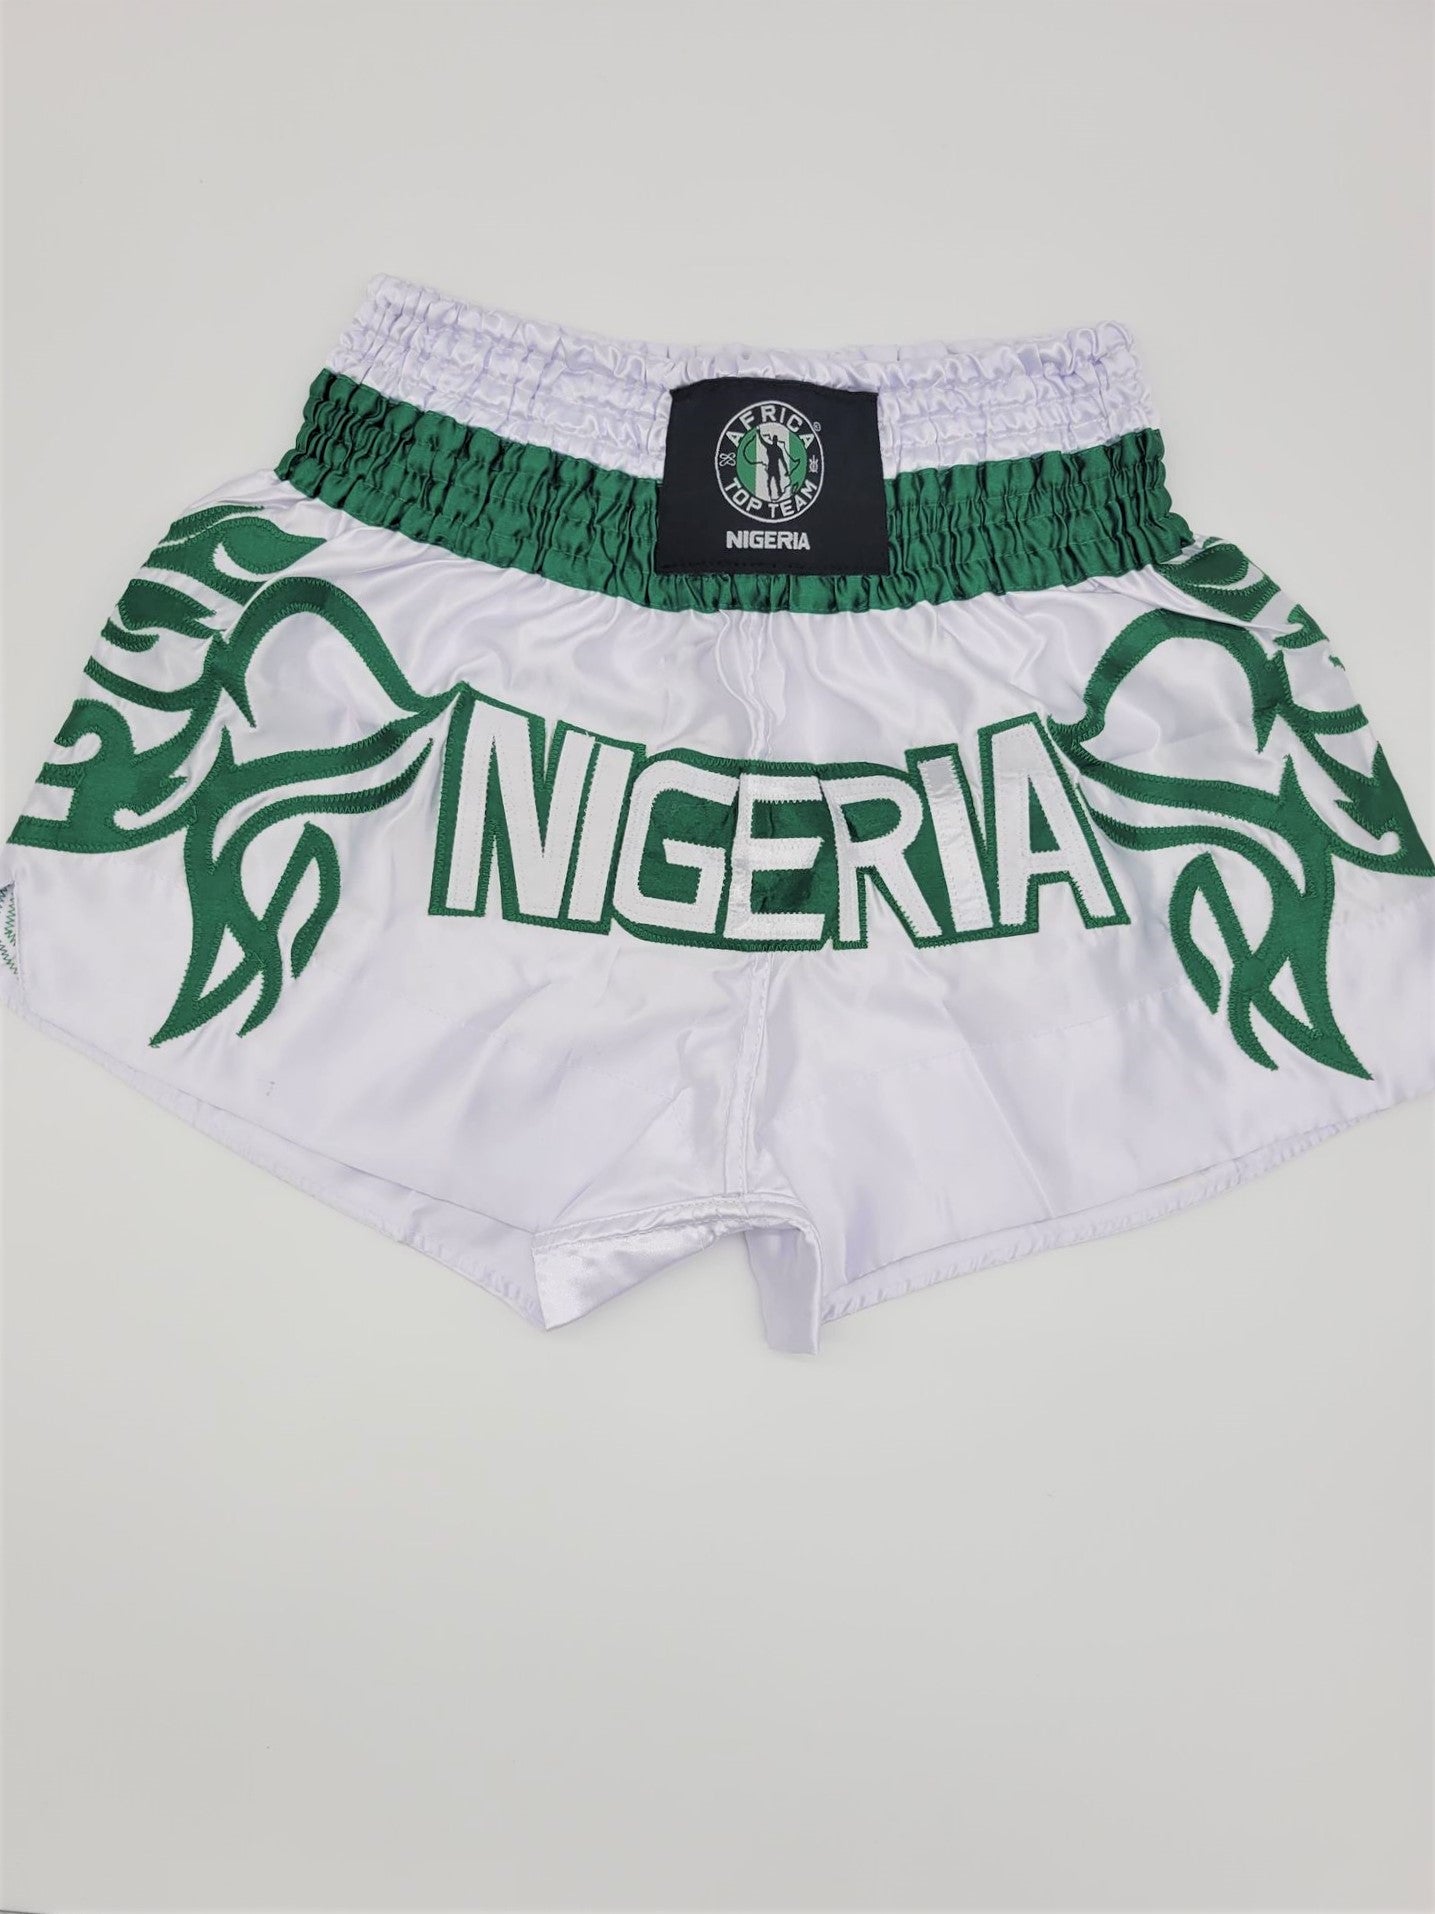 Africa Top Team Nigeria Green/White Rash guard and Muay Thai Set    Boxing, MMA